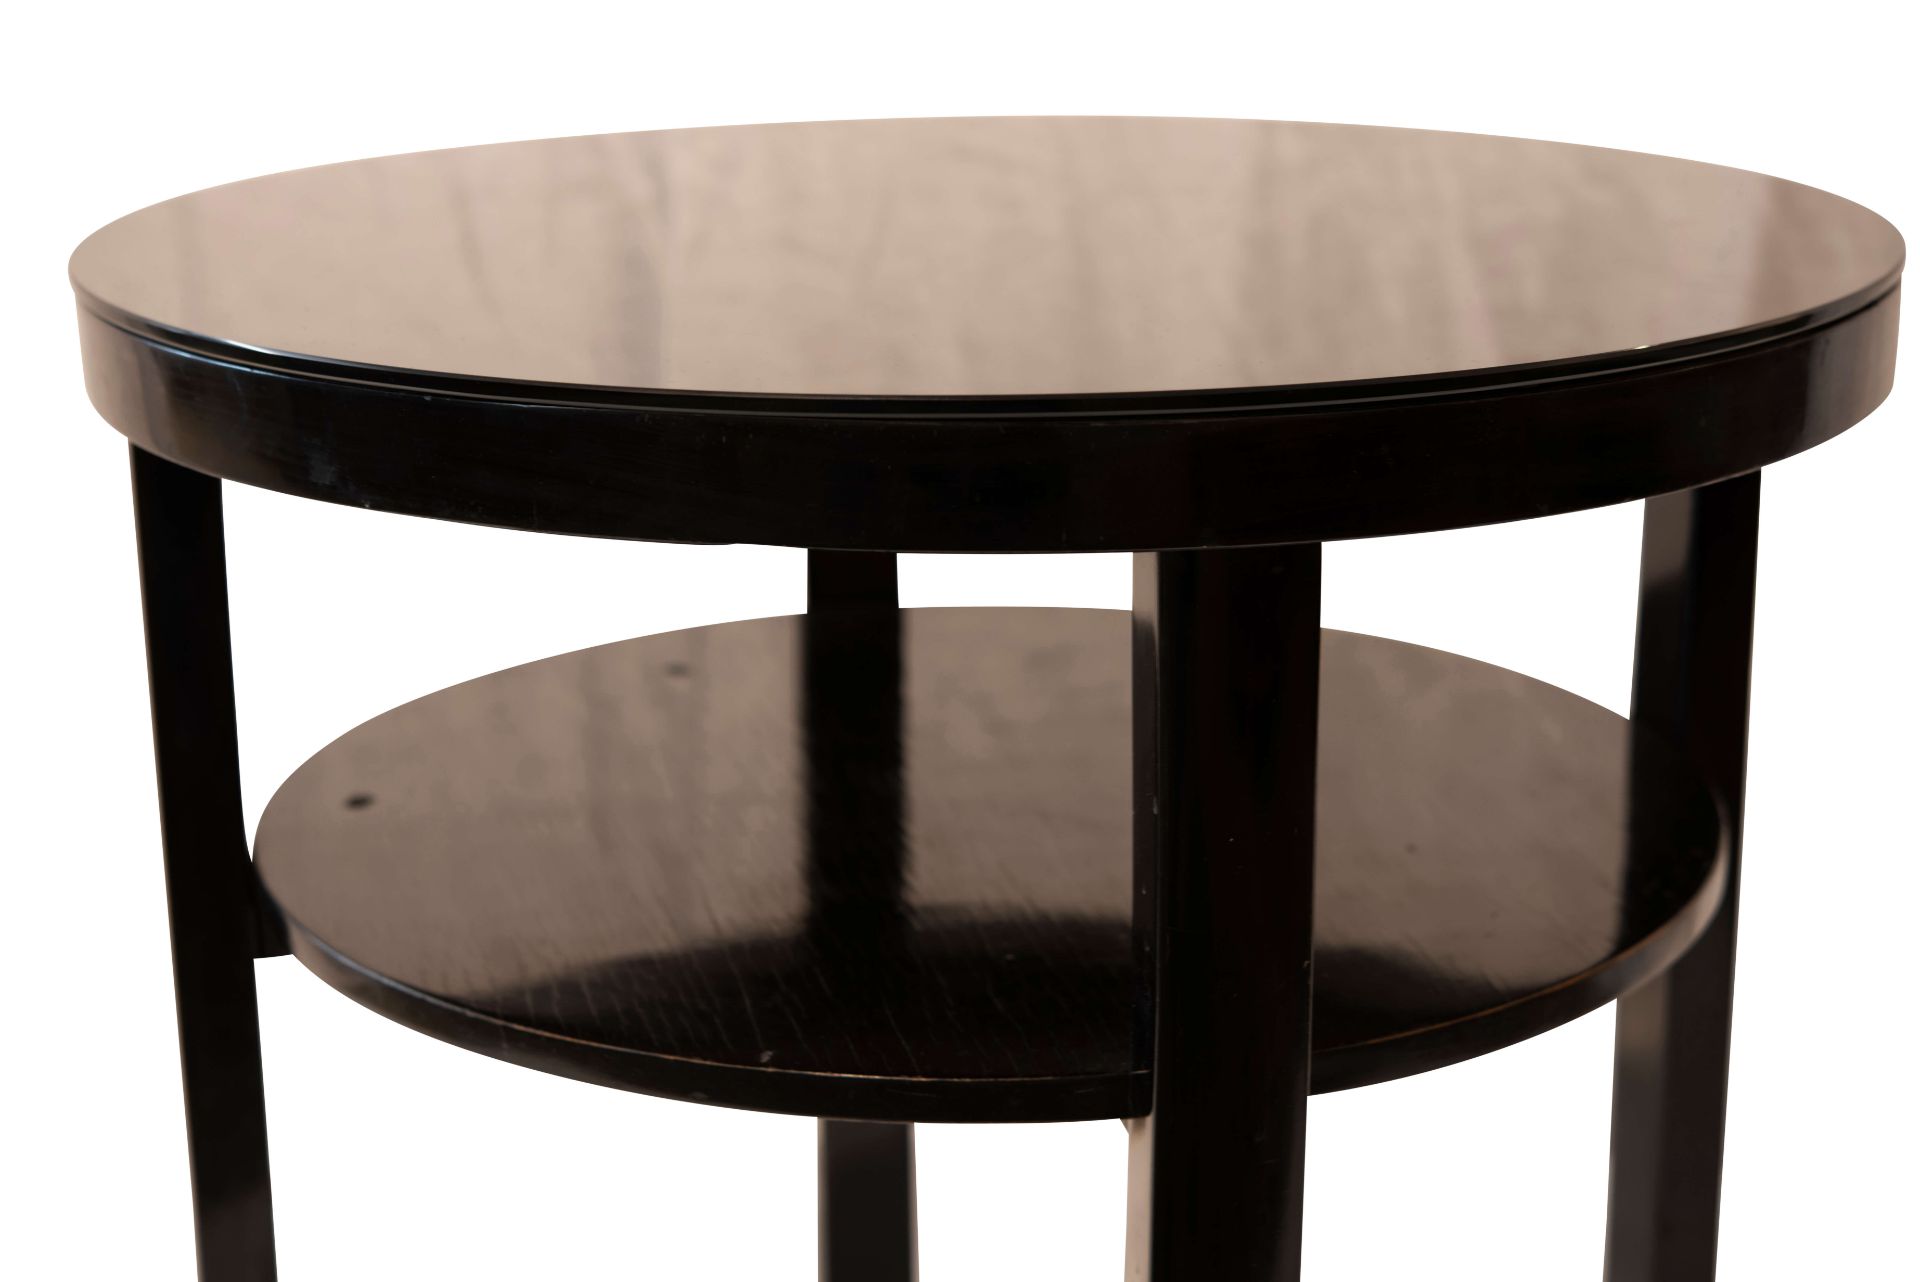 Jugendstil Tisch rund | Art Nouveau Table Round - Image 2 of 5